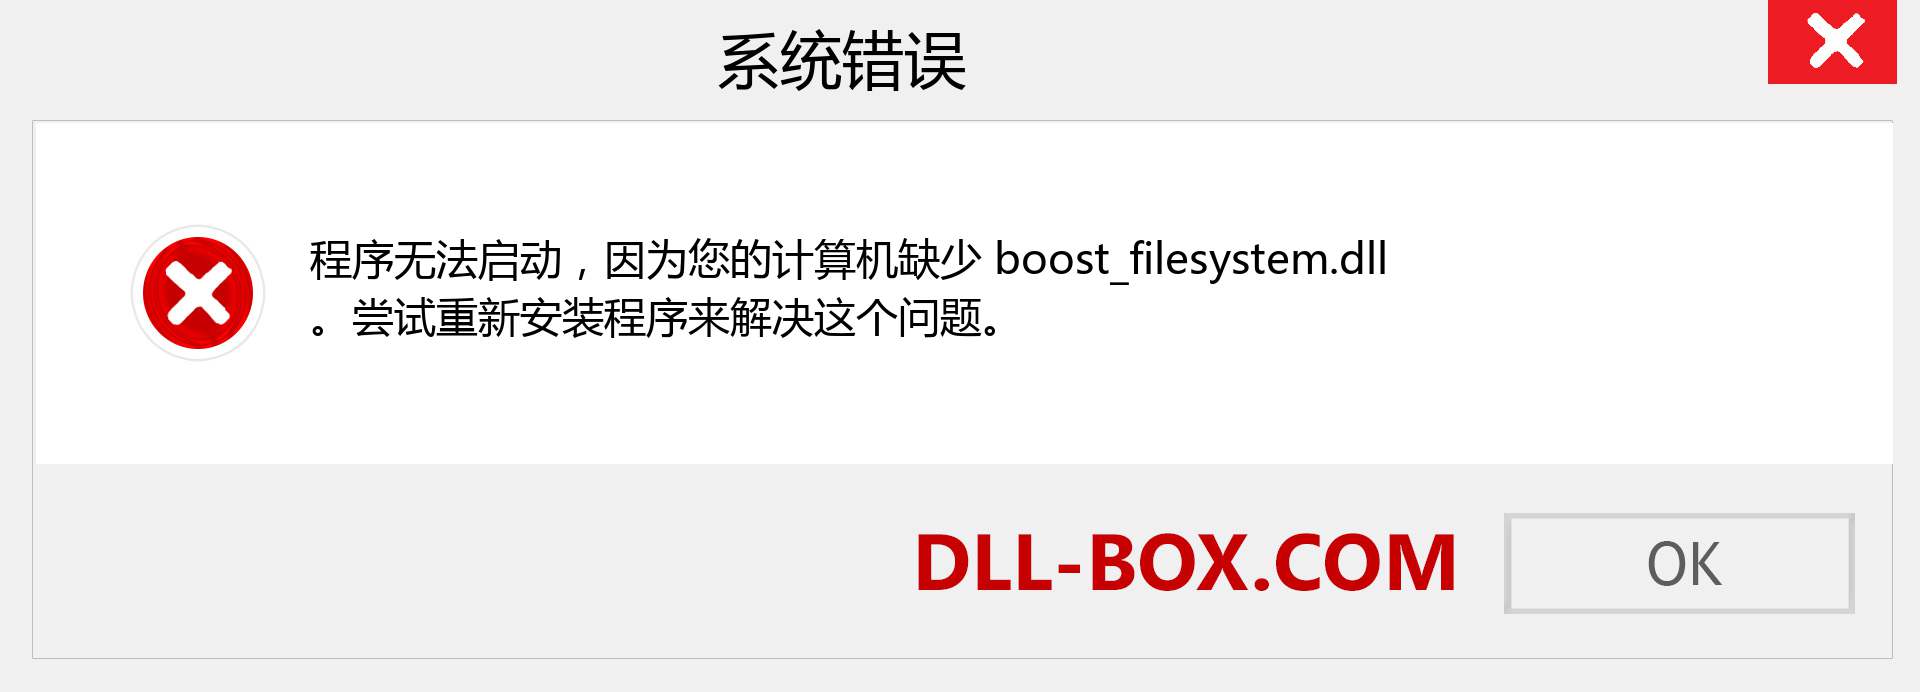 boost_filesystem.dll 文件丢失？。 适用于 Windows 7、8、10 的下载 - 修复 Windows、照片、图像上的 boost_filesystem dll 丢失错误